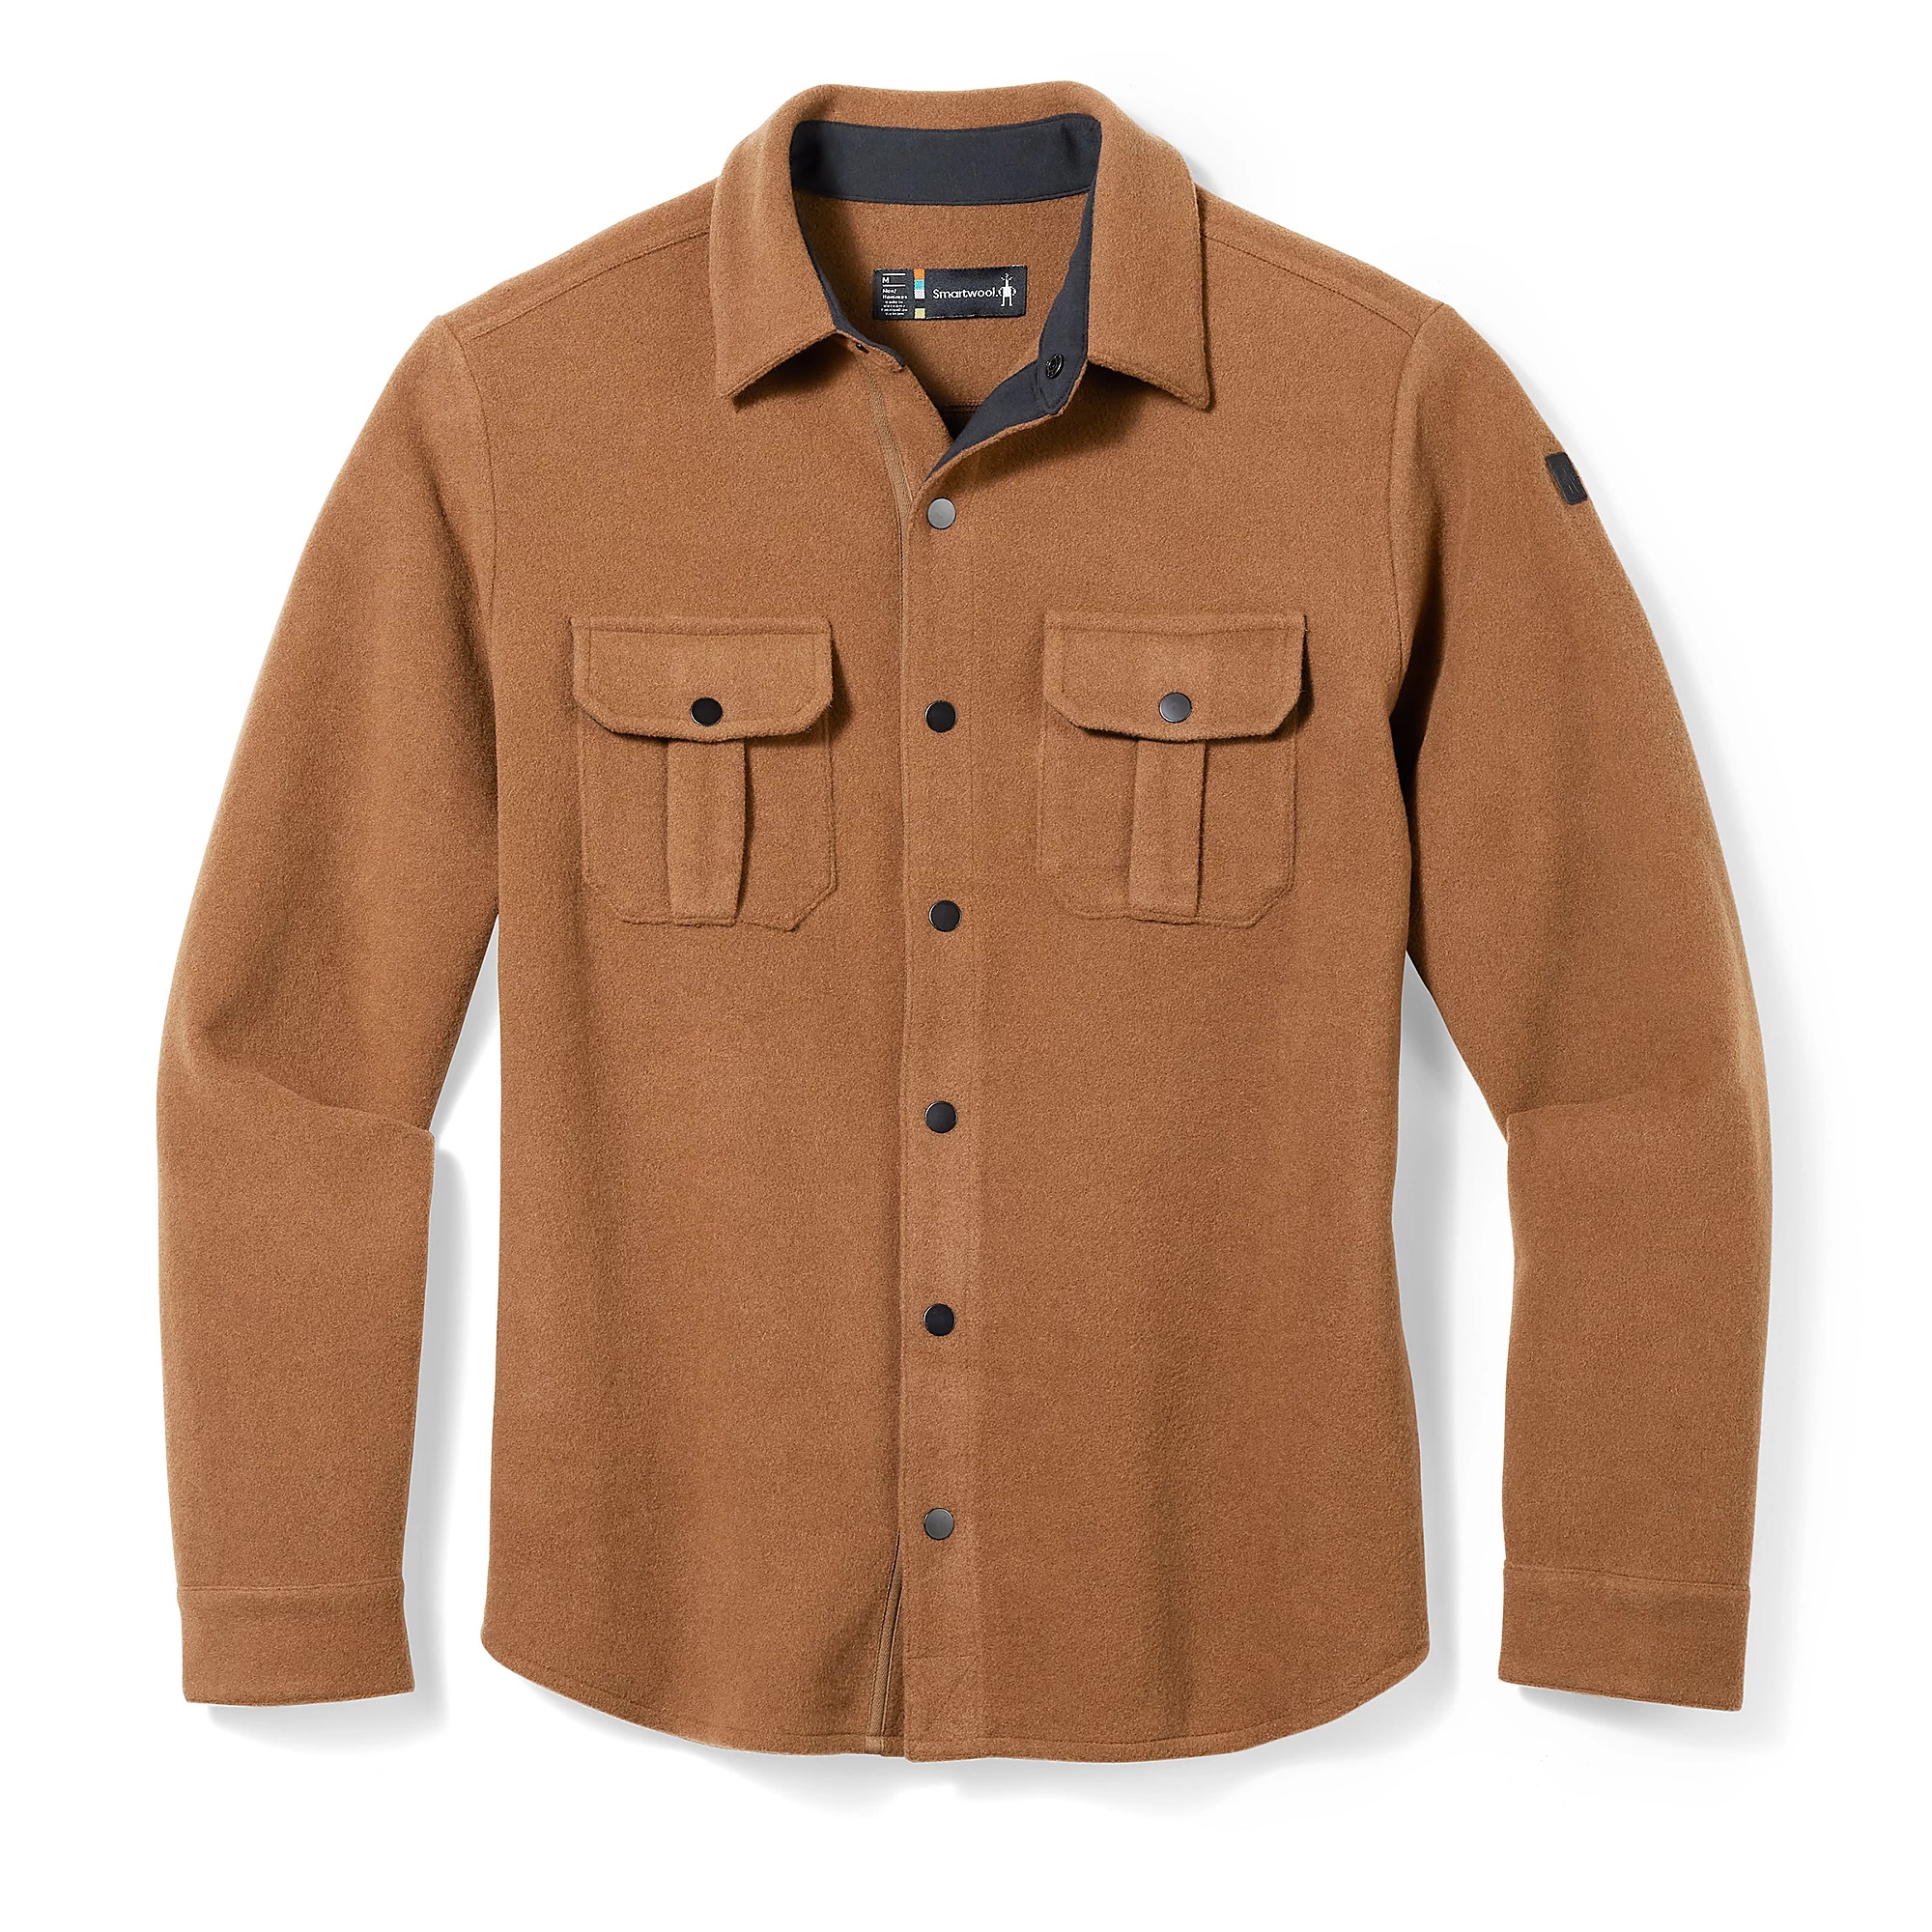 Men's Anchor Line Shirt Jacket